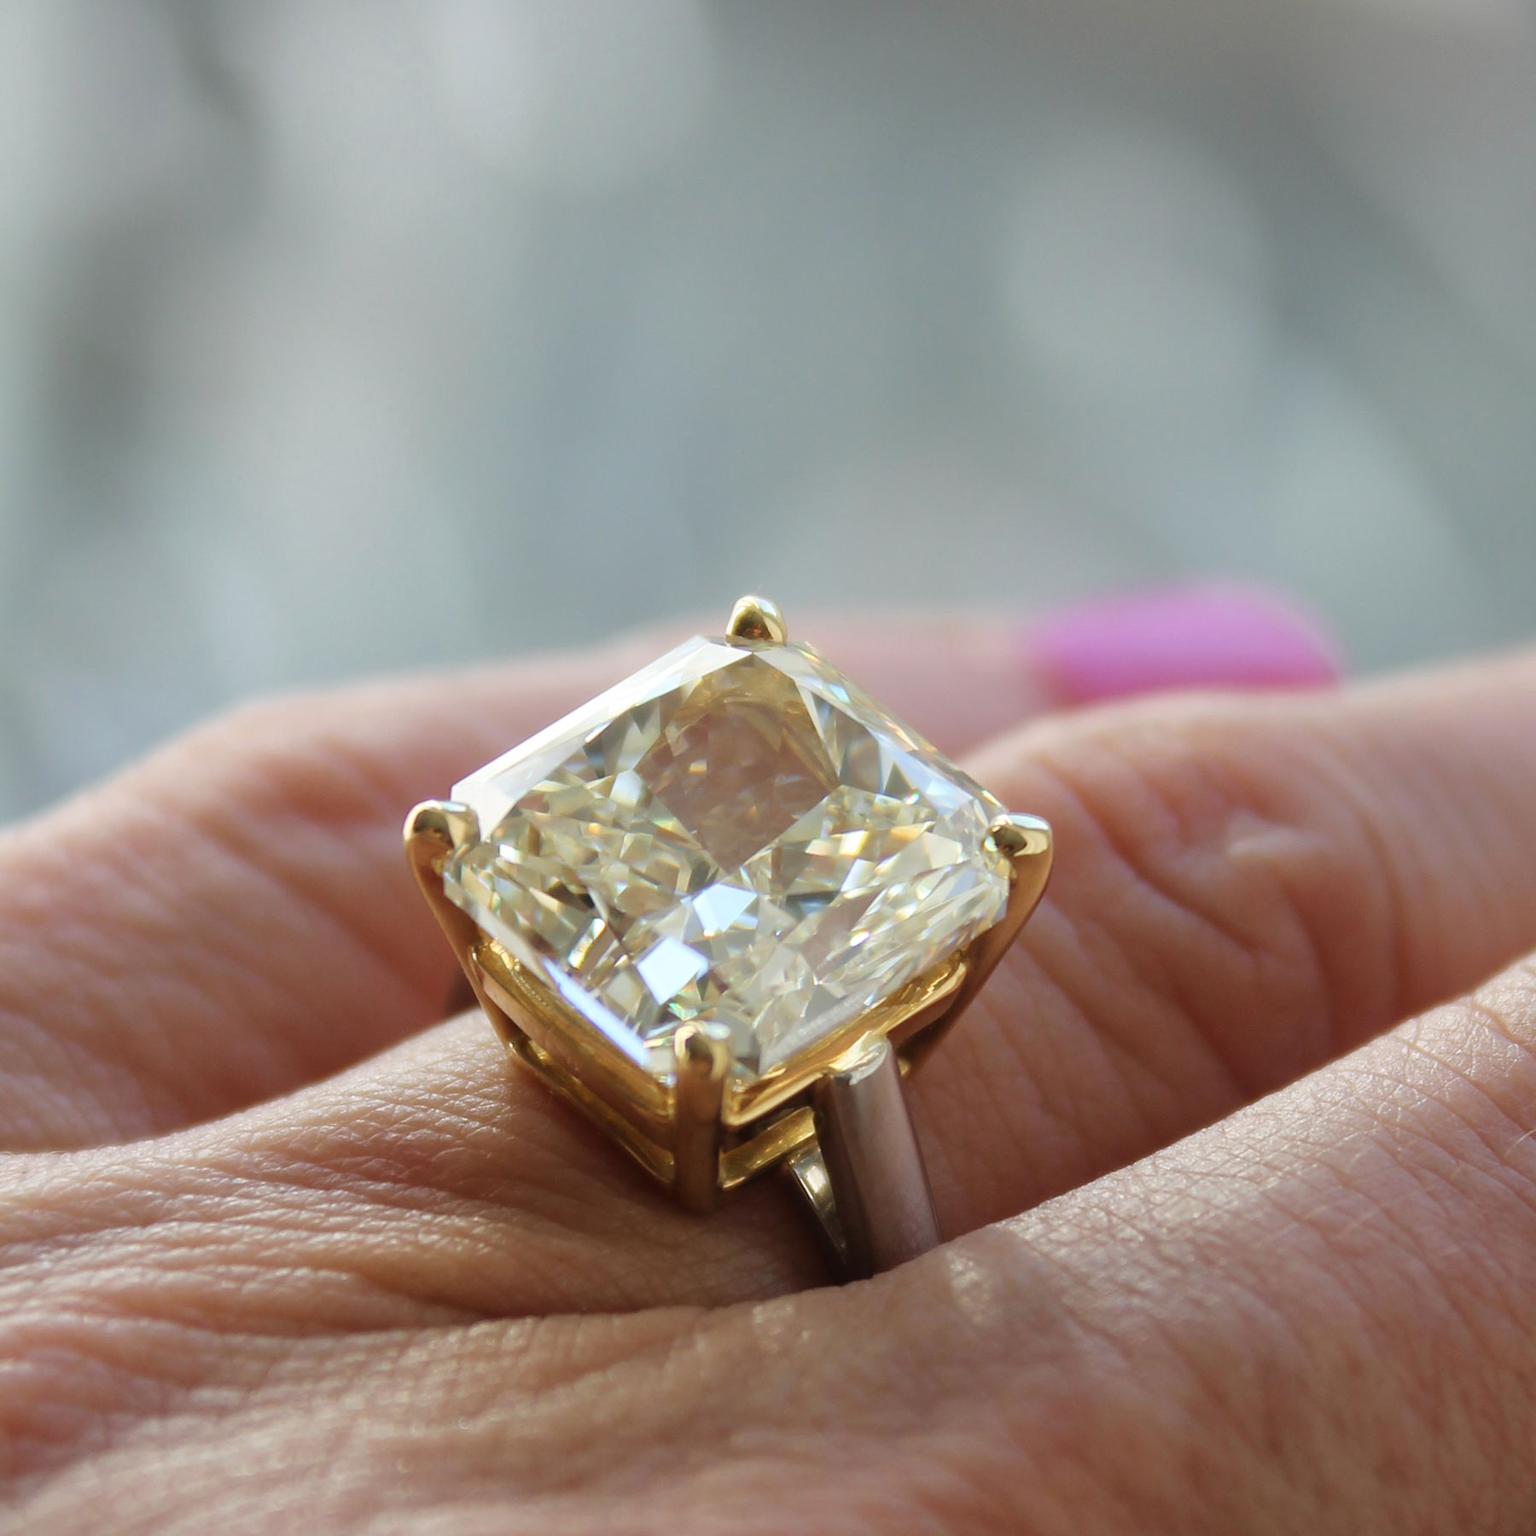 De Beers 12.23 carat radiant-cut yellowish diamond ring